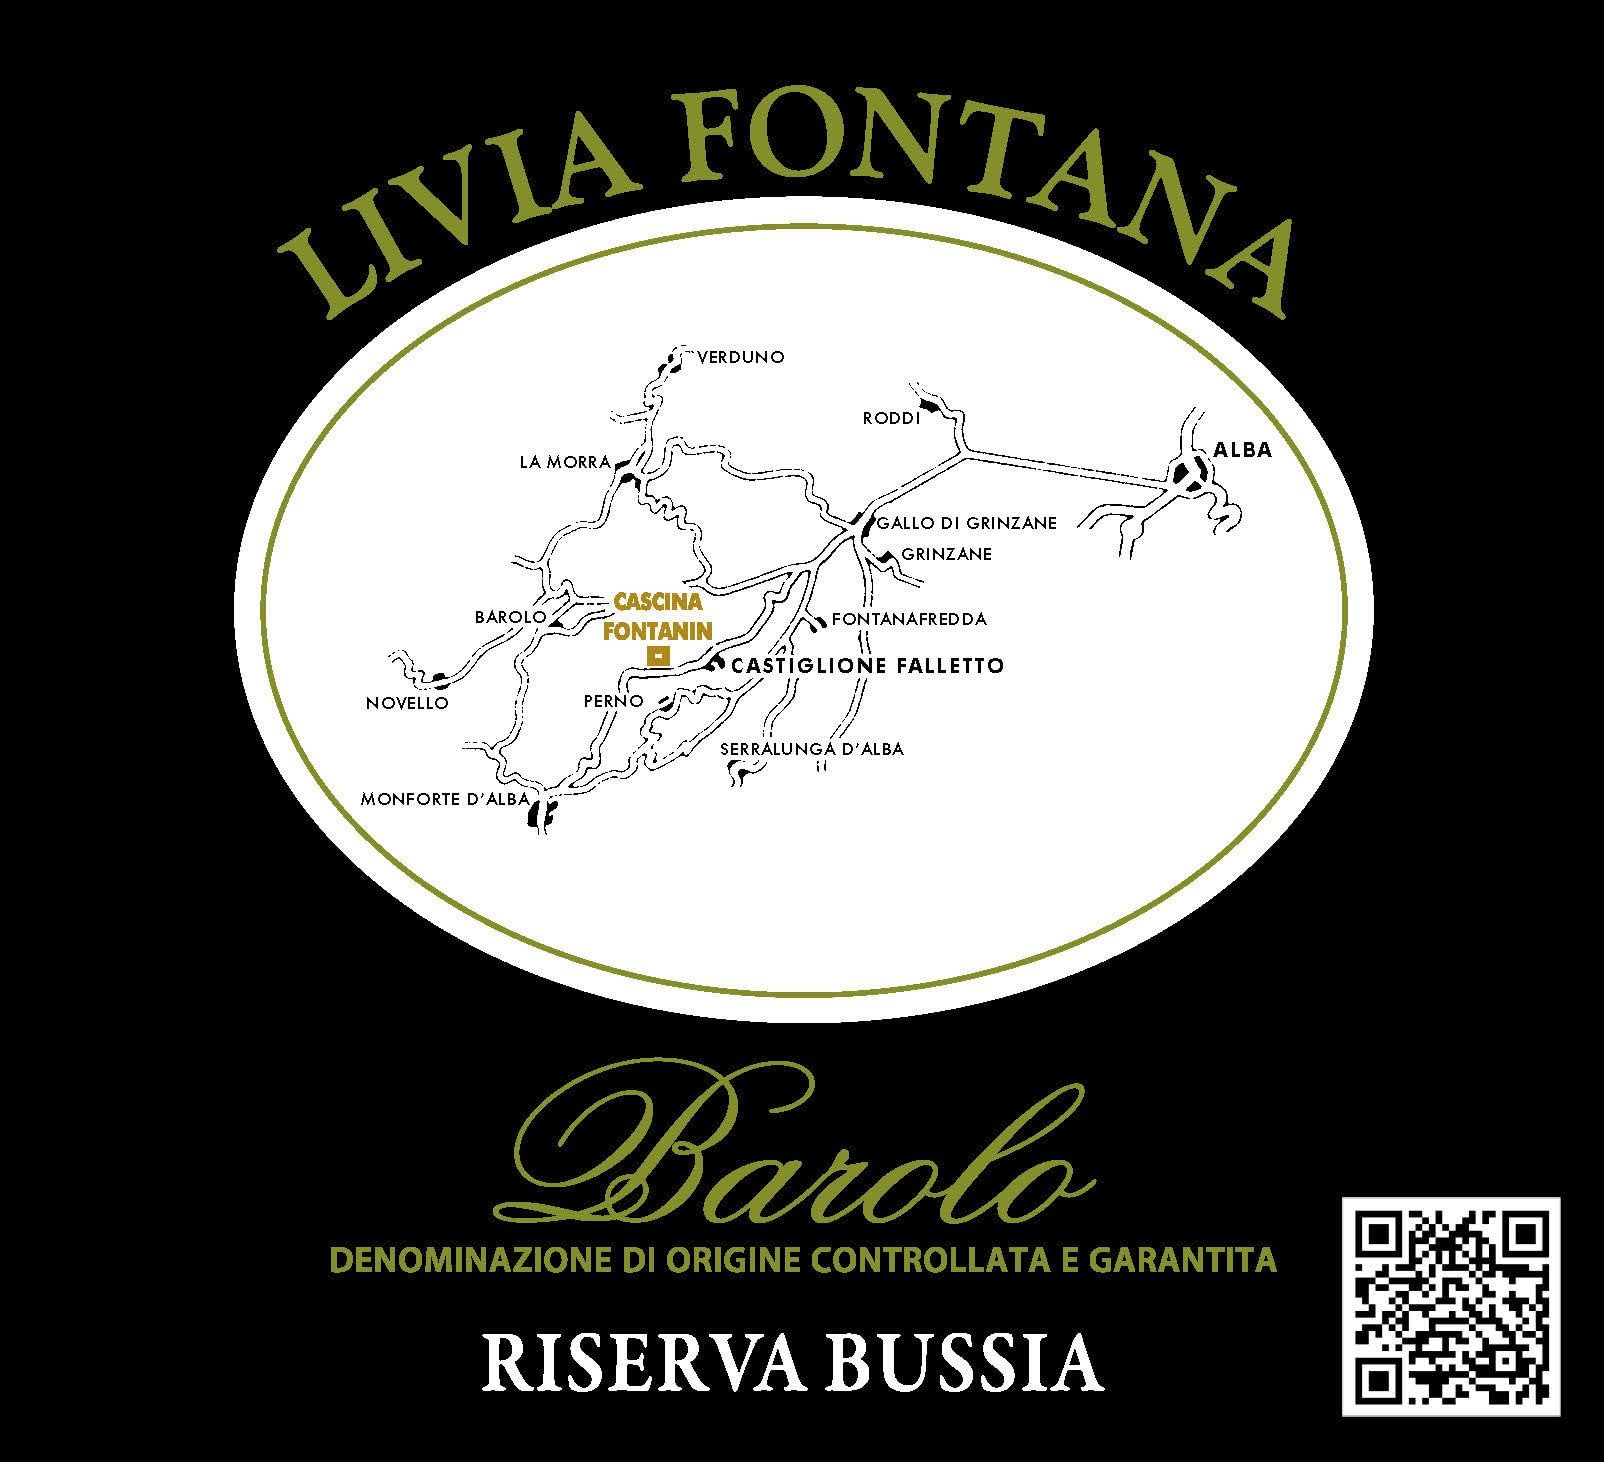 Livia Fontana Barolo Riserva Bussia 2013